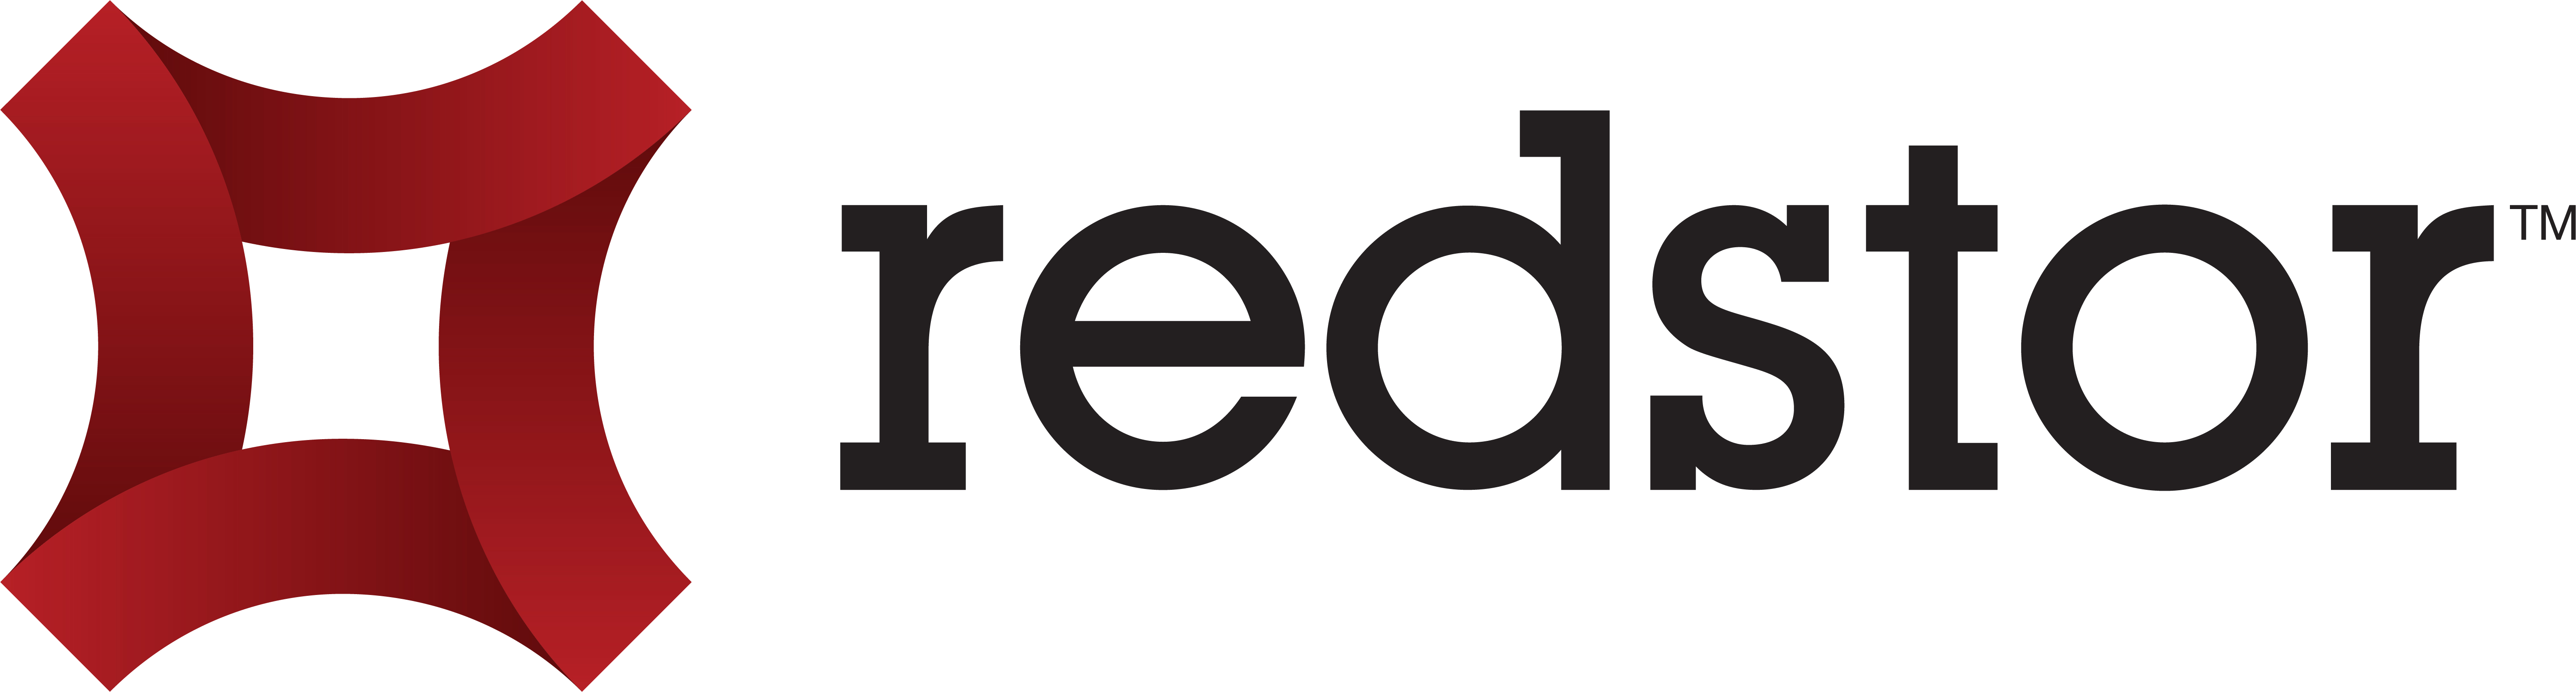 Redstor logo